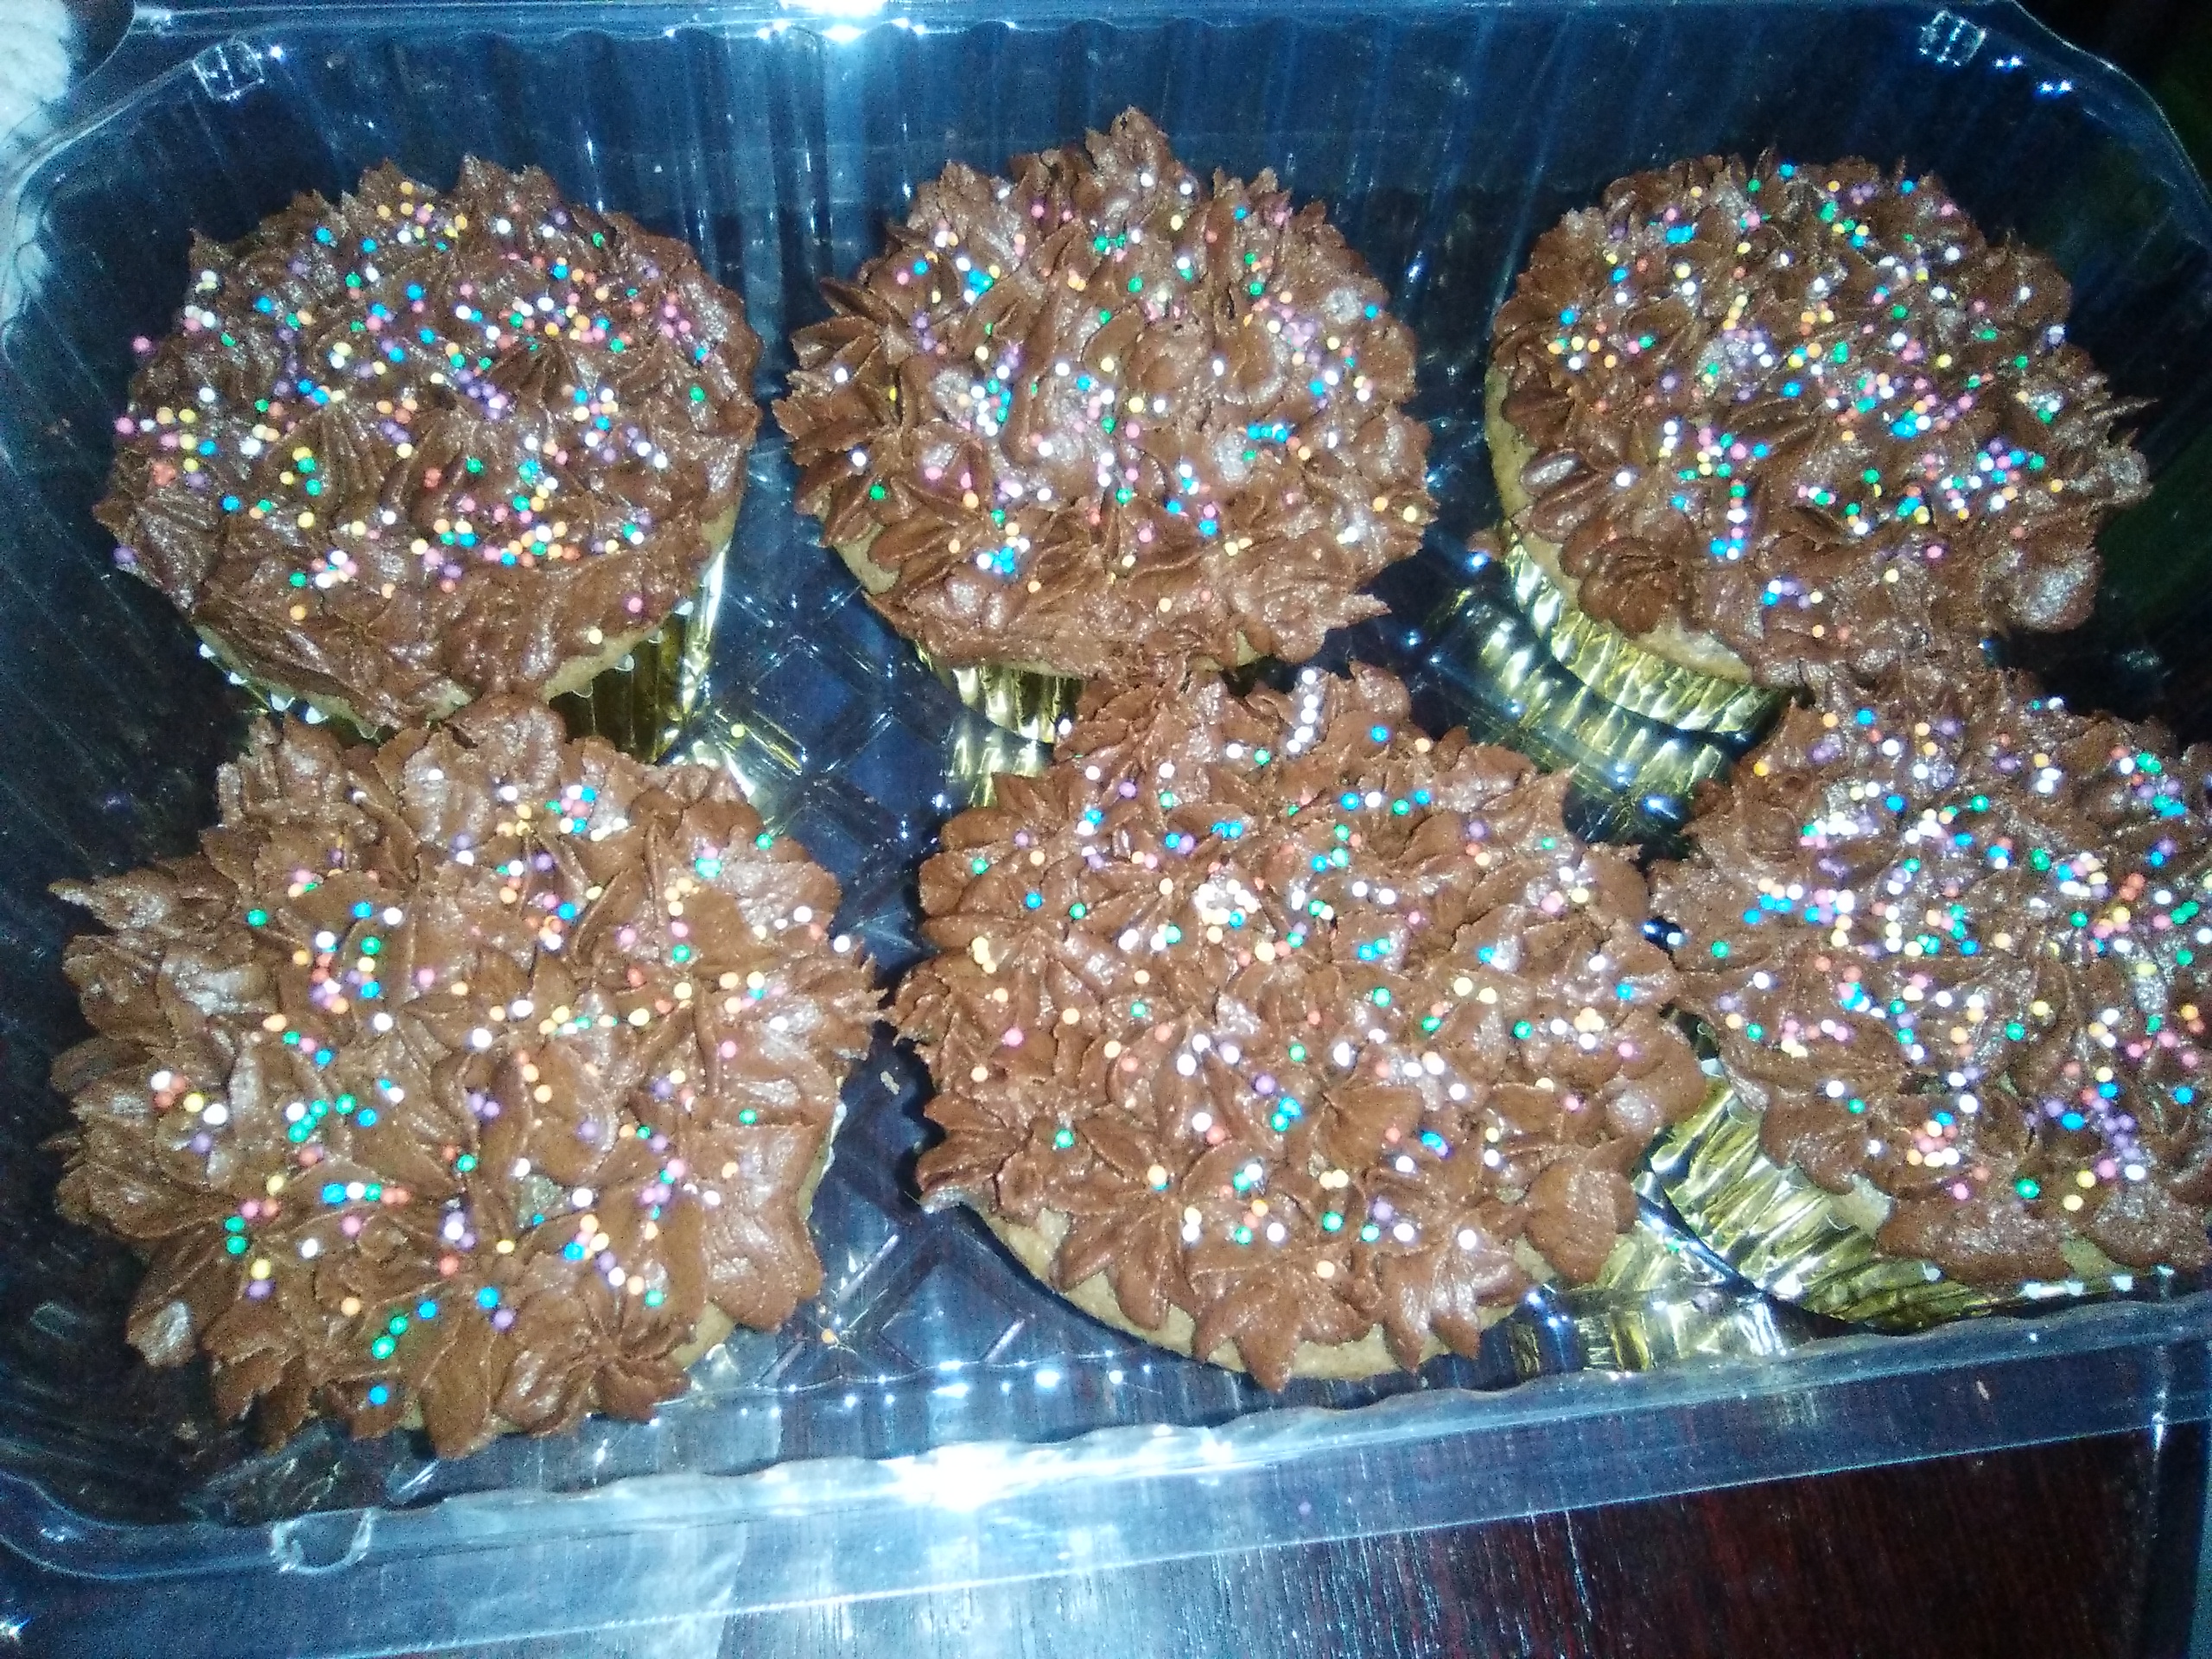 cupcakes2.jpg